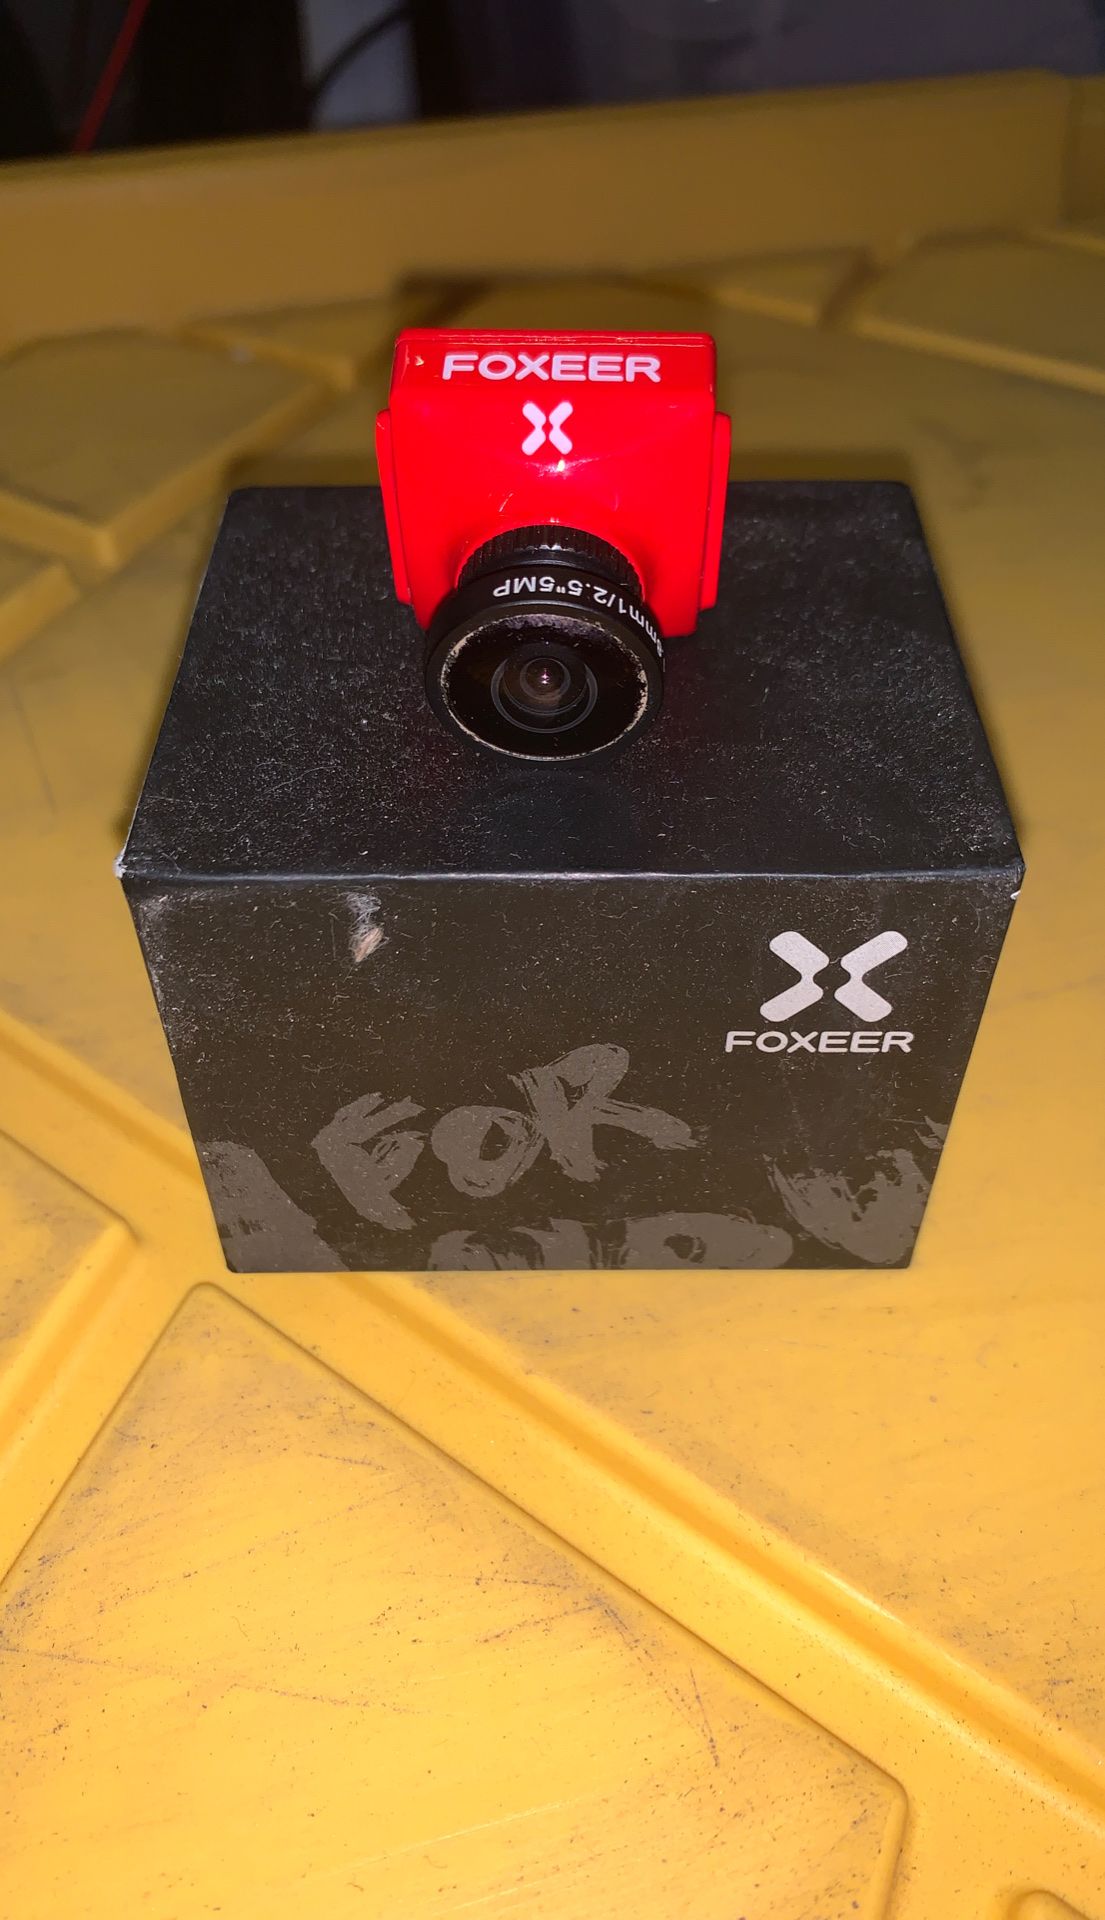 Foxeer g-wdr camera